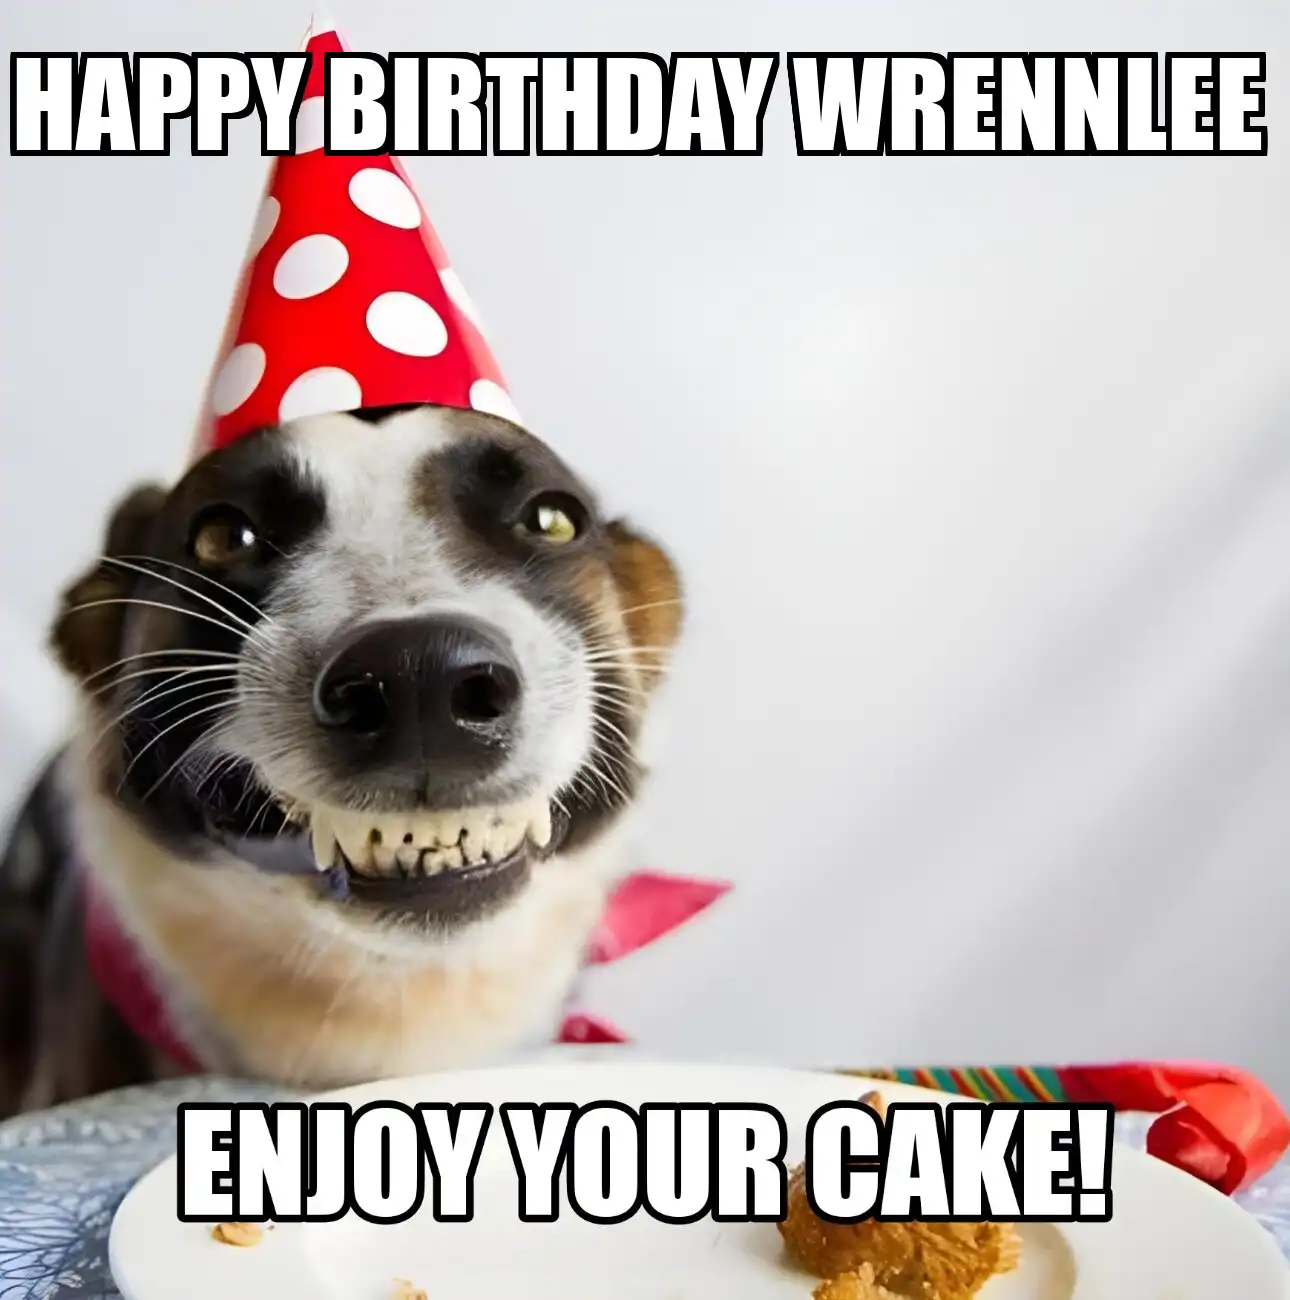 Happy Birthday Wrennlee Enjoy Your Cake Dog Meme